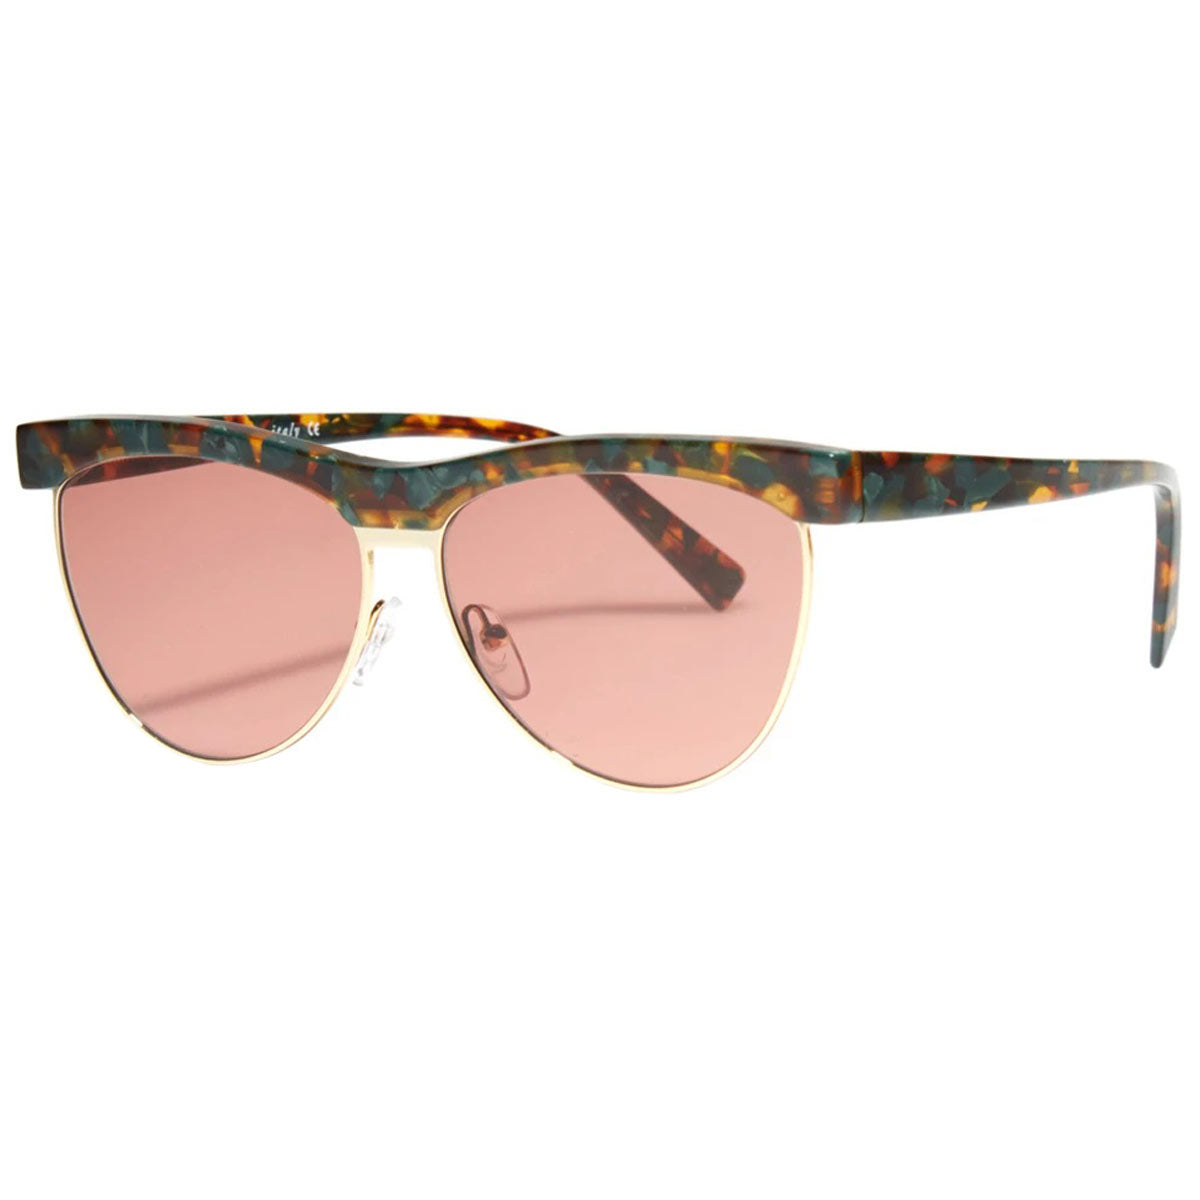 Bob Sdrunk Women's Sunglasses - Lizzie Light Pink Lens / LIZZIE-06-LP-57-14-145